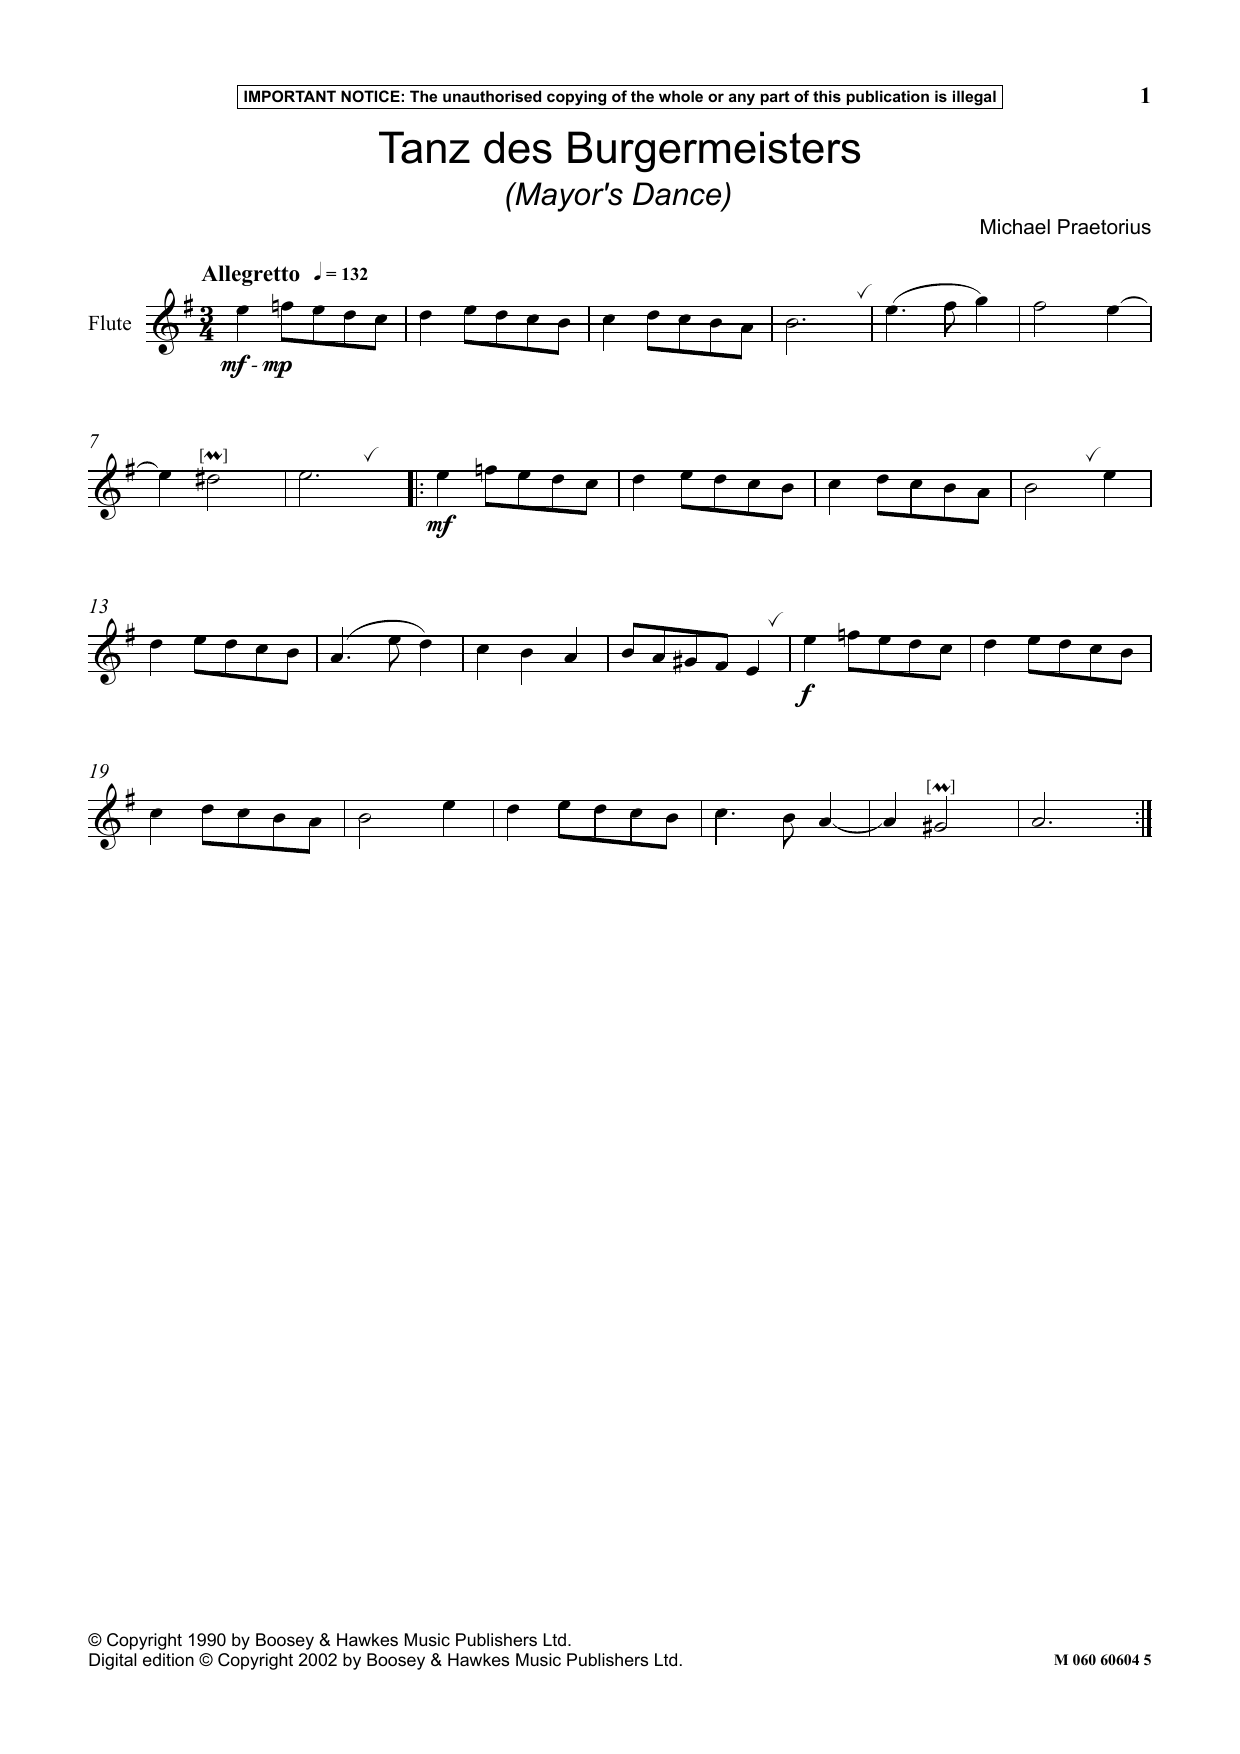 Michael Praetorius Tanz Des Burgermeisters (Mayor's Dance) Sheet Music Notes & Chords for Instrumental Solo - Download or Print PDF